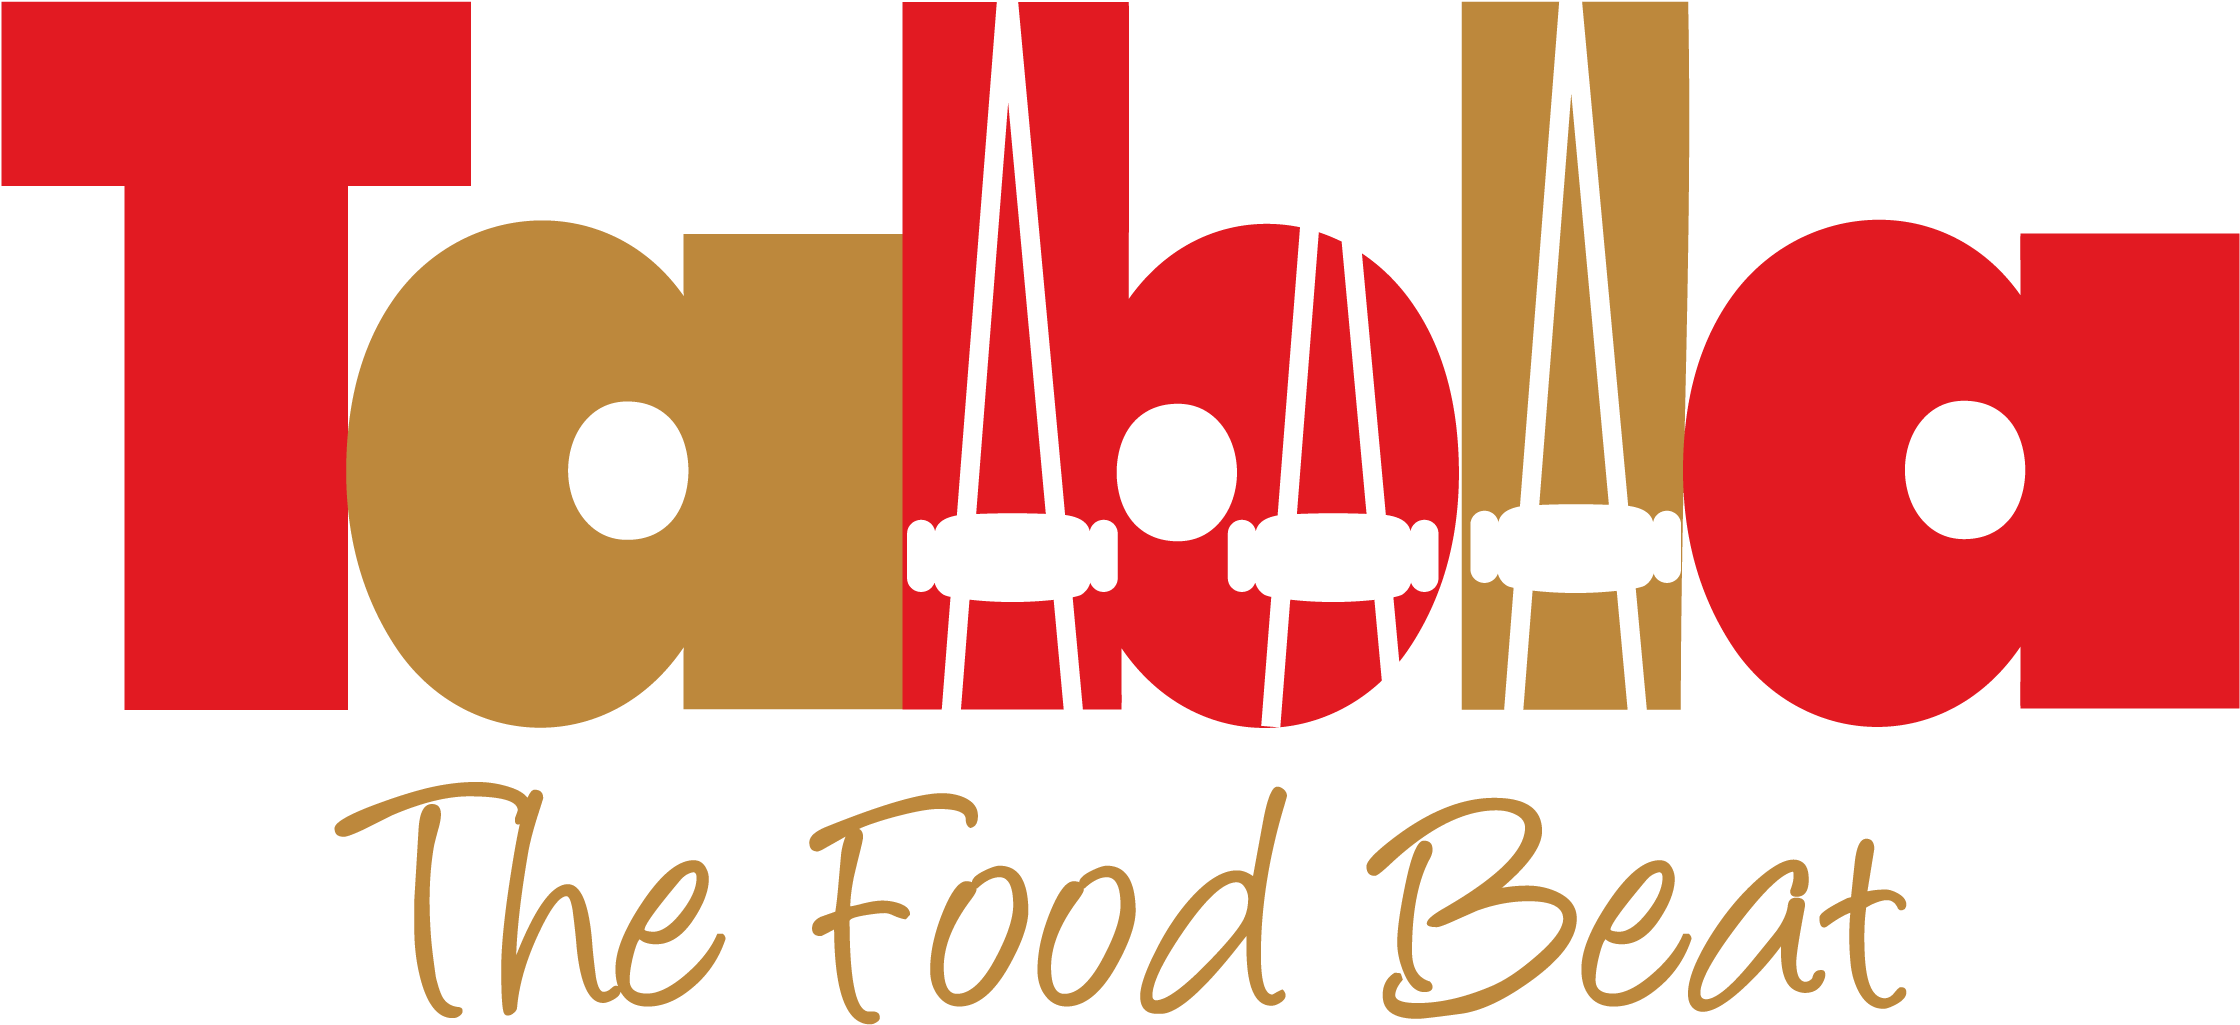 Welcome To "tabla"a Group Of Fine Dining Restaurantspopular - Tabla Restaurant Logo (2478x1164), Png Download